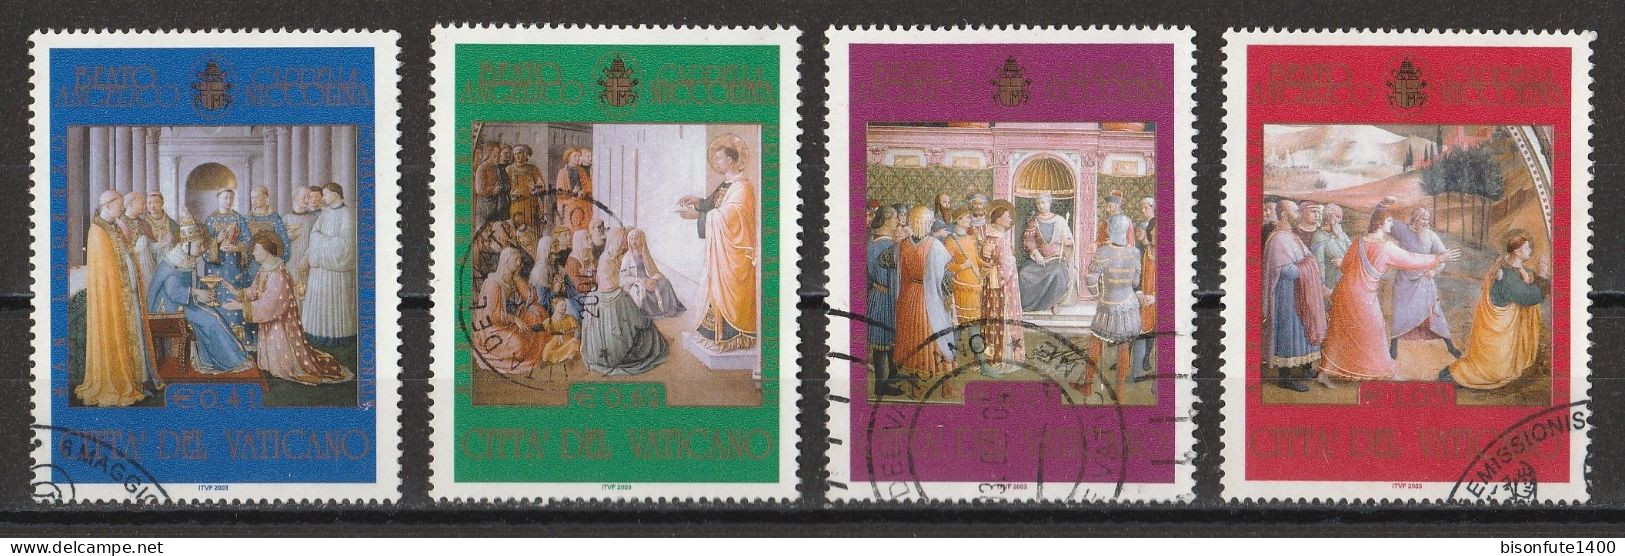 Vatican 2003 : Timbres Yvert & Tellier N° 1309 - 1310 - 1311 Et 1312 Oblitérés. - Usados